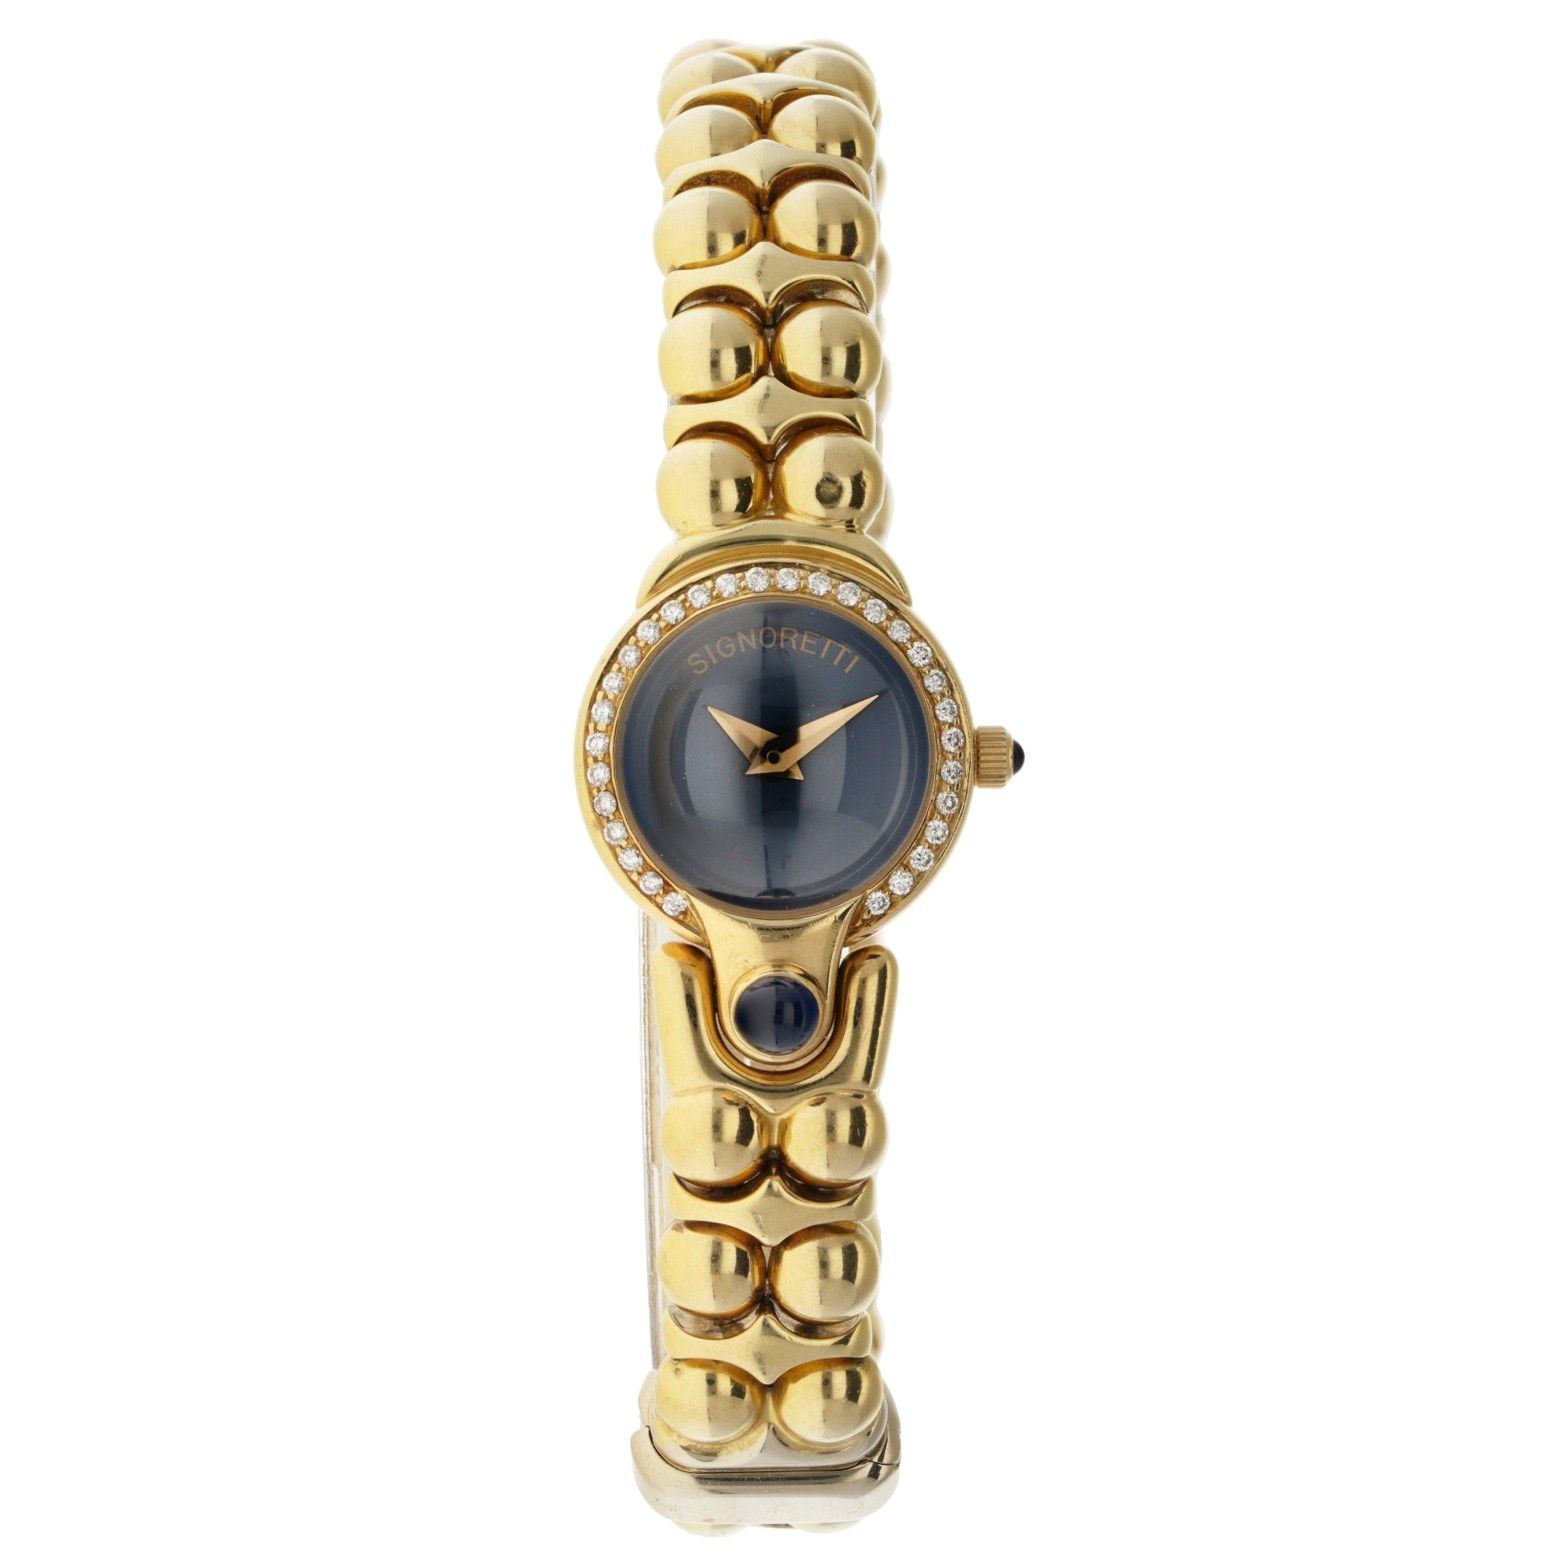 Signoretti OR 11/12 - Ladies watch. Case: yellow gold (18 kt.) - bracelet: yello&hellip;